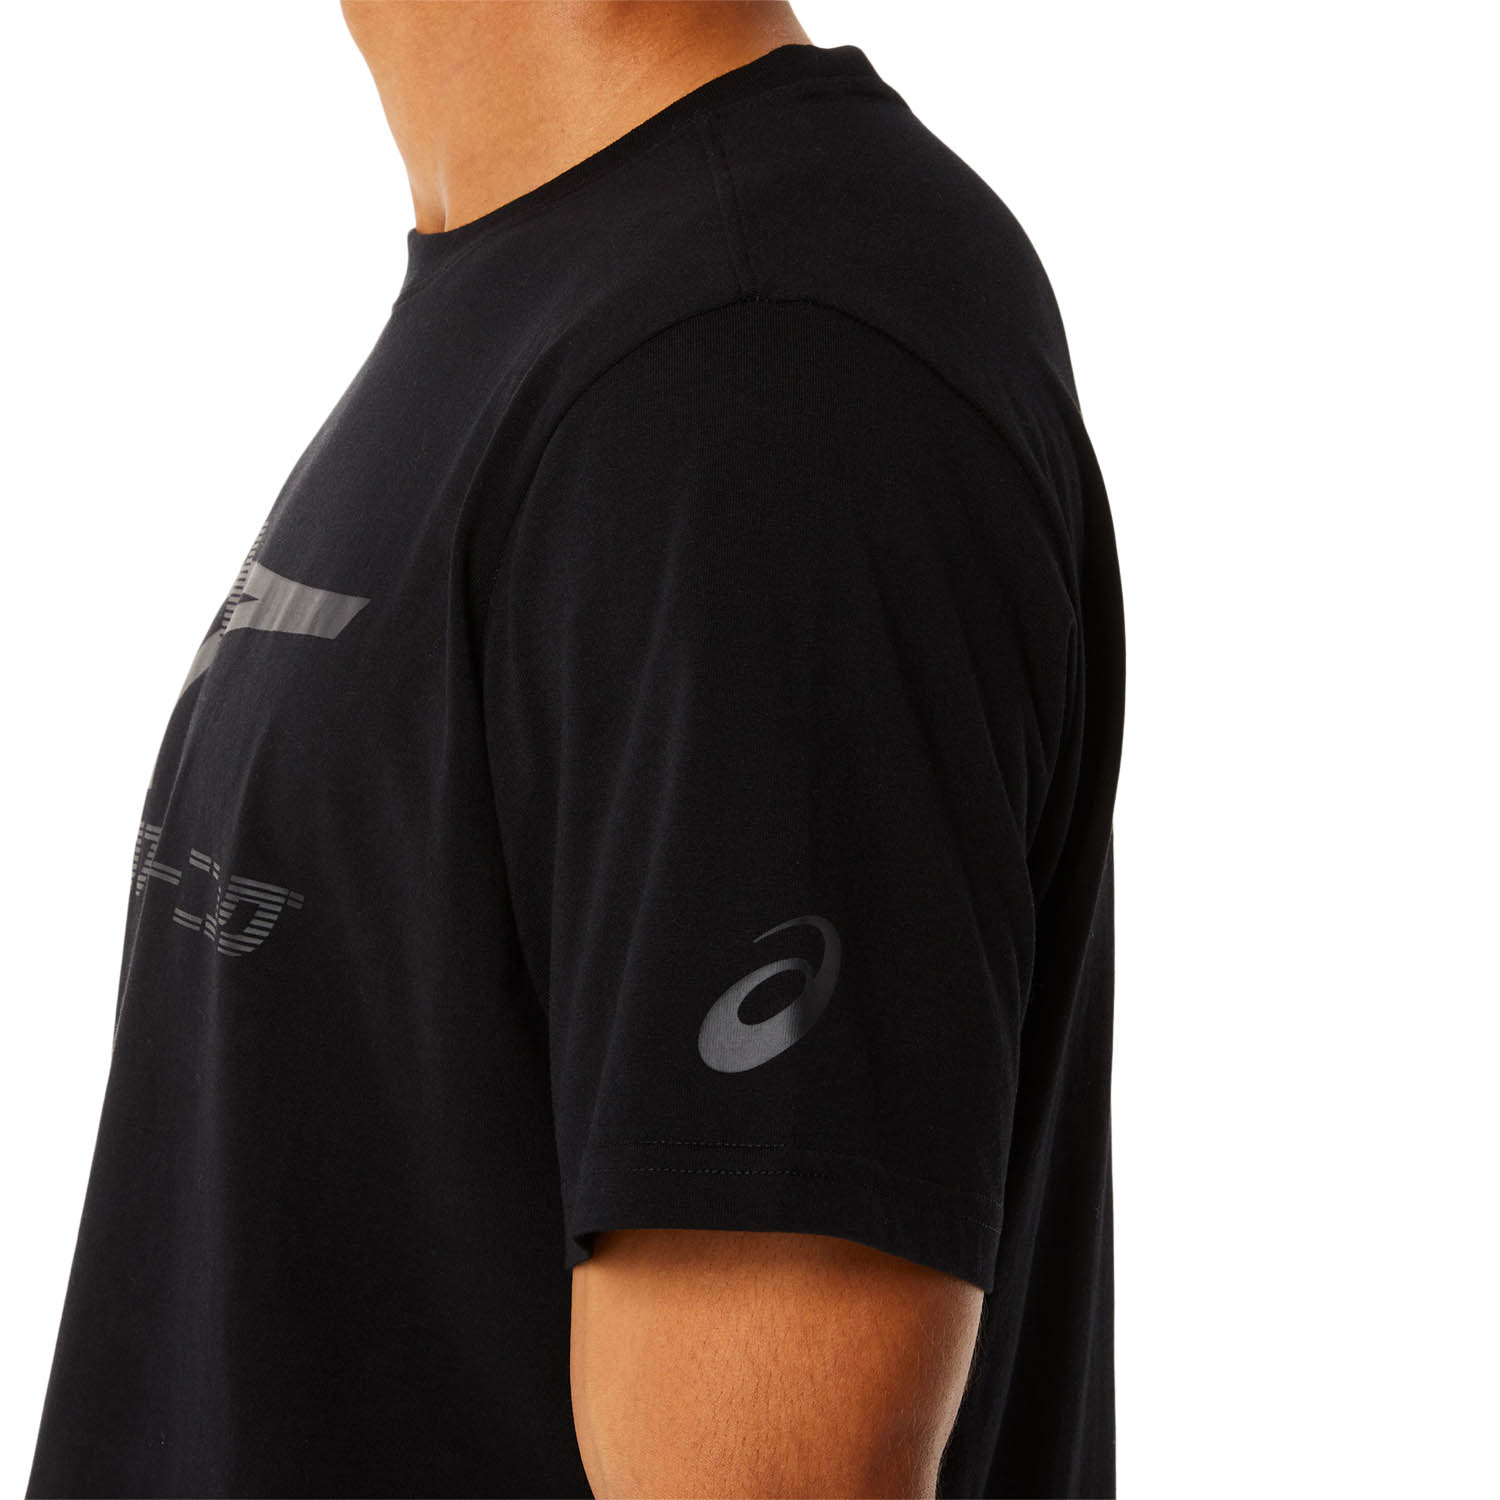 Asics Tiger Camiseta - Performance Black/Graphite Grey